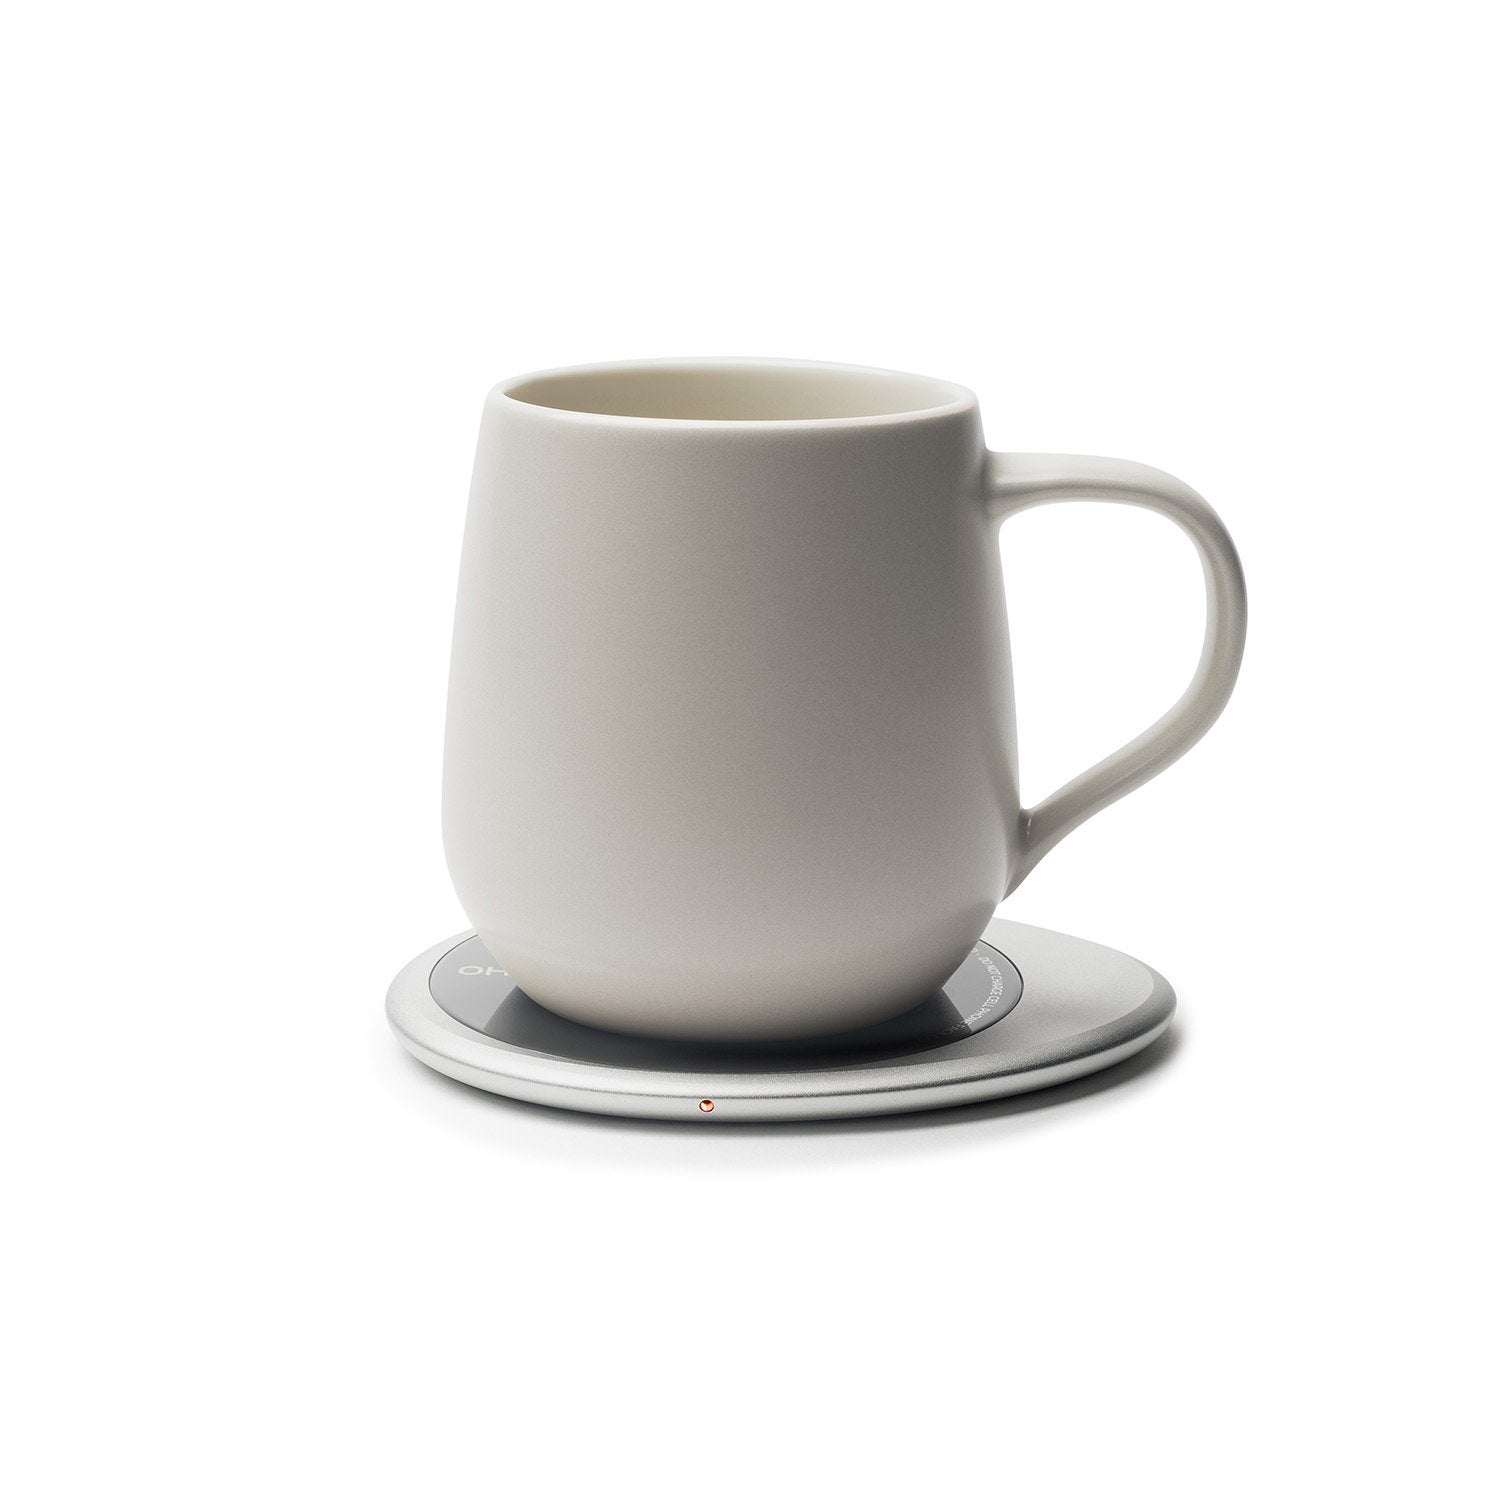 Soft Gray mug on heating pad